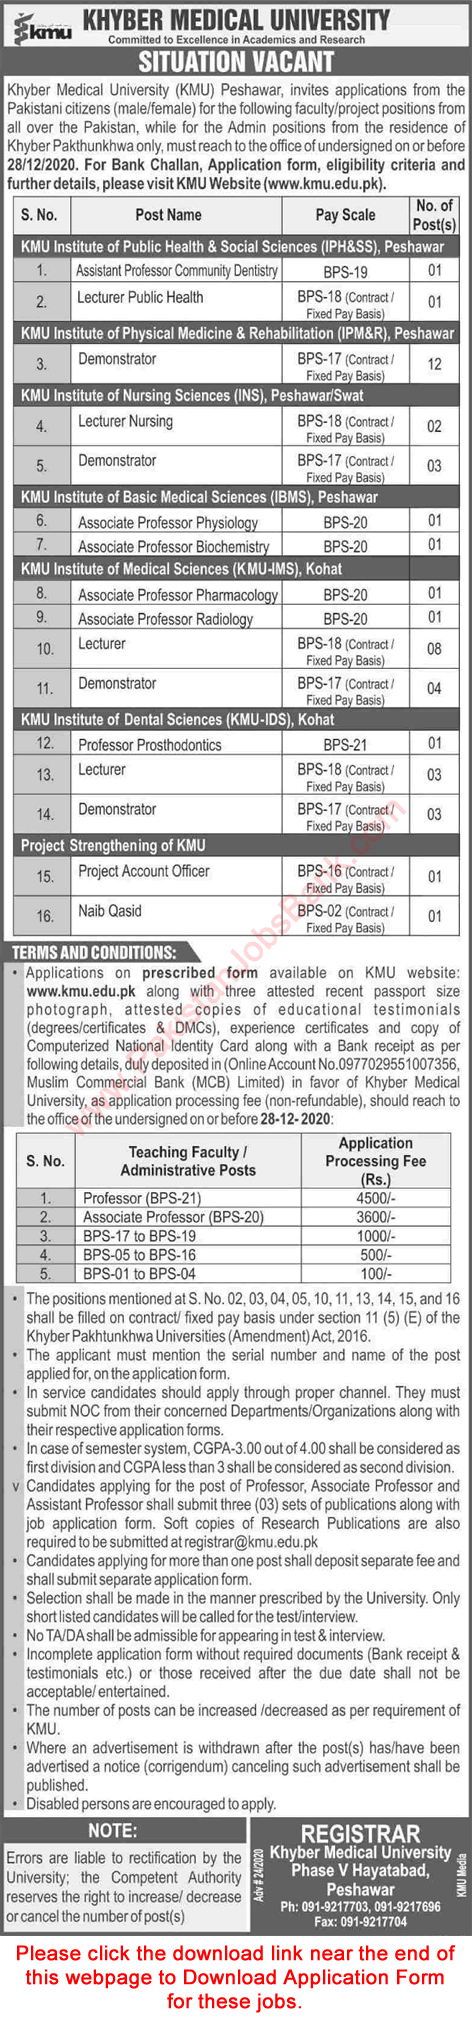 Khyber Medical University Peshawar Jobs December 2020 Application Form Teaching Faculty & Others Latest